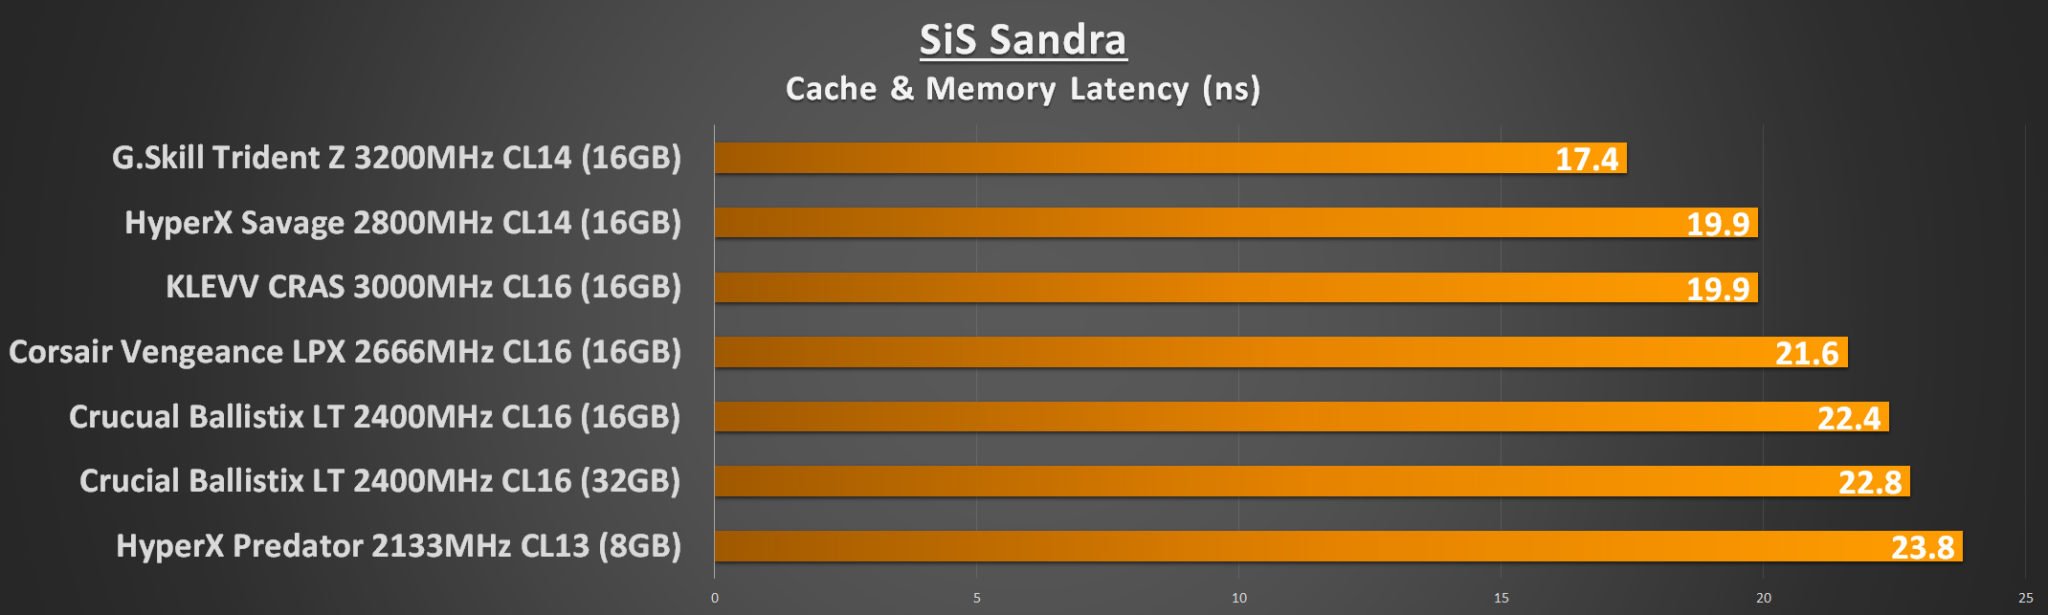 SiS Sandra Memory & Cache Latency